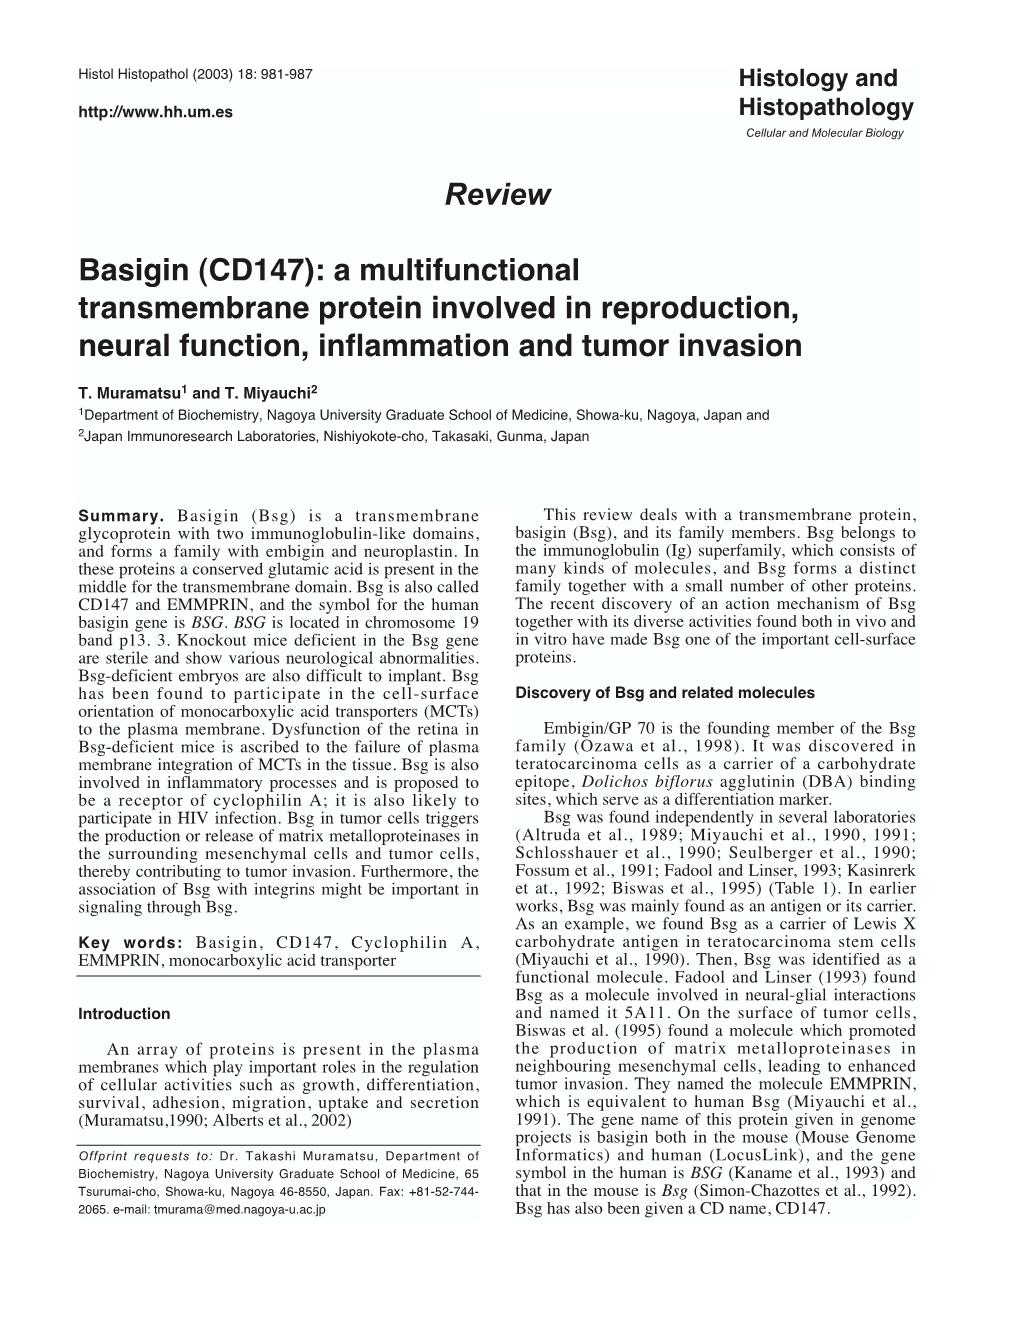 Review Basigin (CD147)